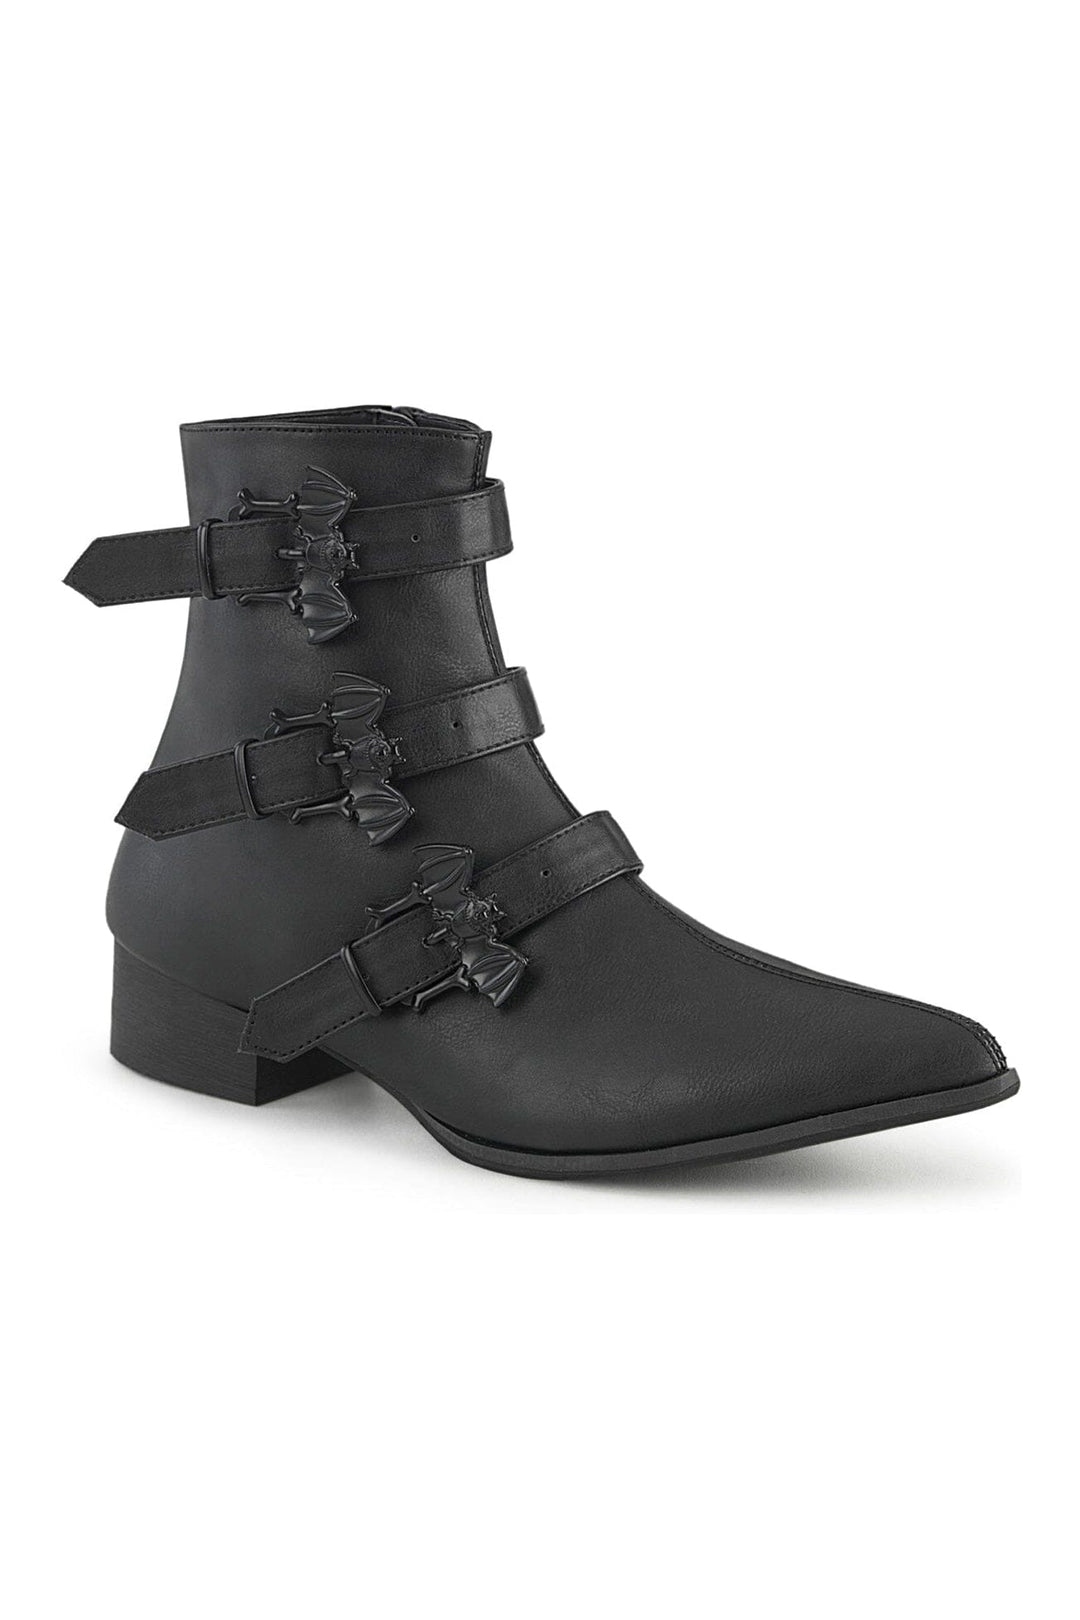 WARLOCK-50-B Black Vegan Leather Ankle Boot-Ankle Boots-Demonia-Black-10-Vegan Leather-SEXYSHOES.COM